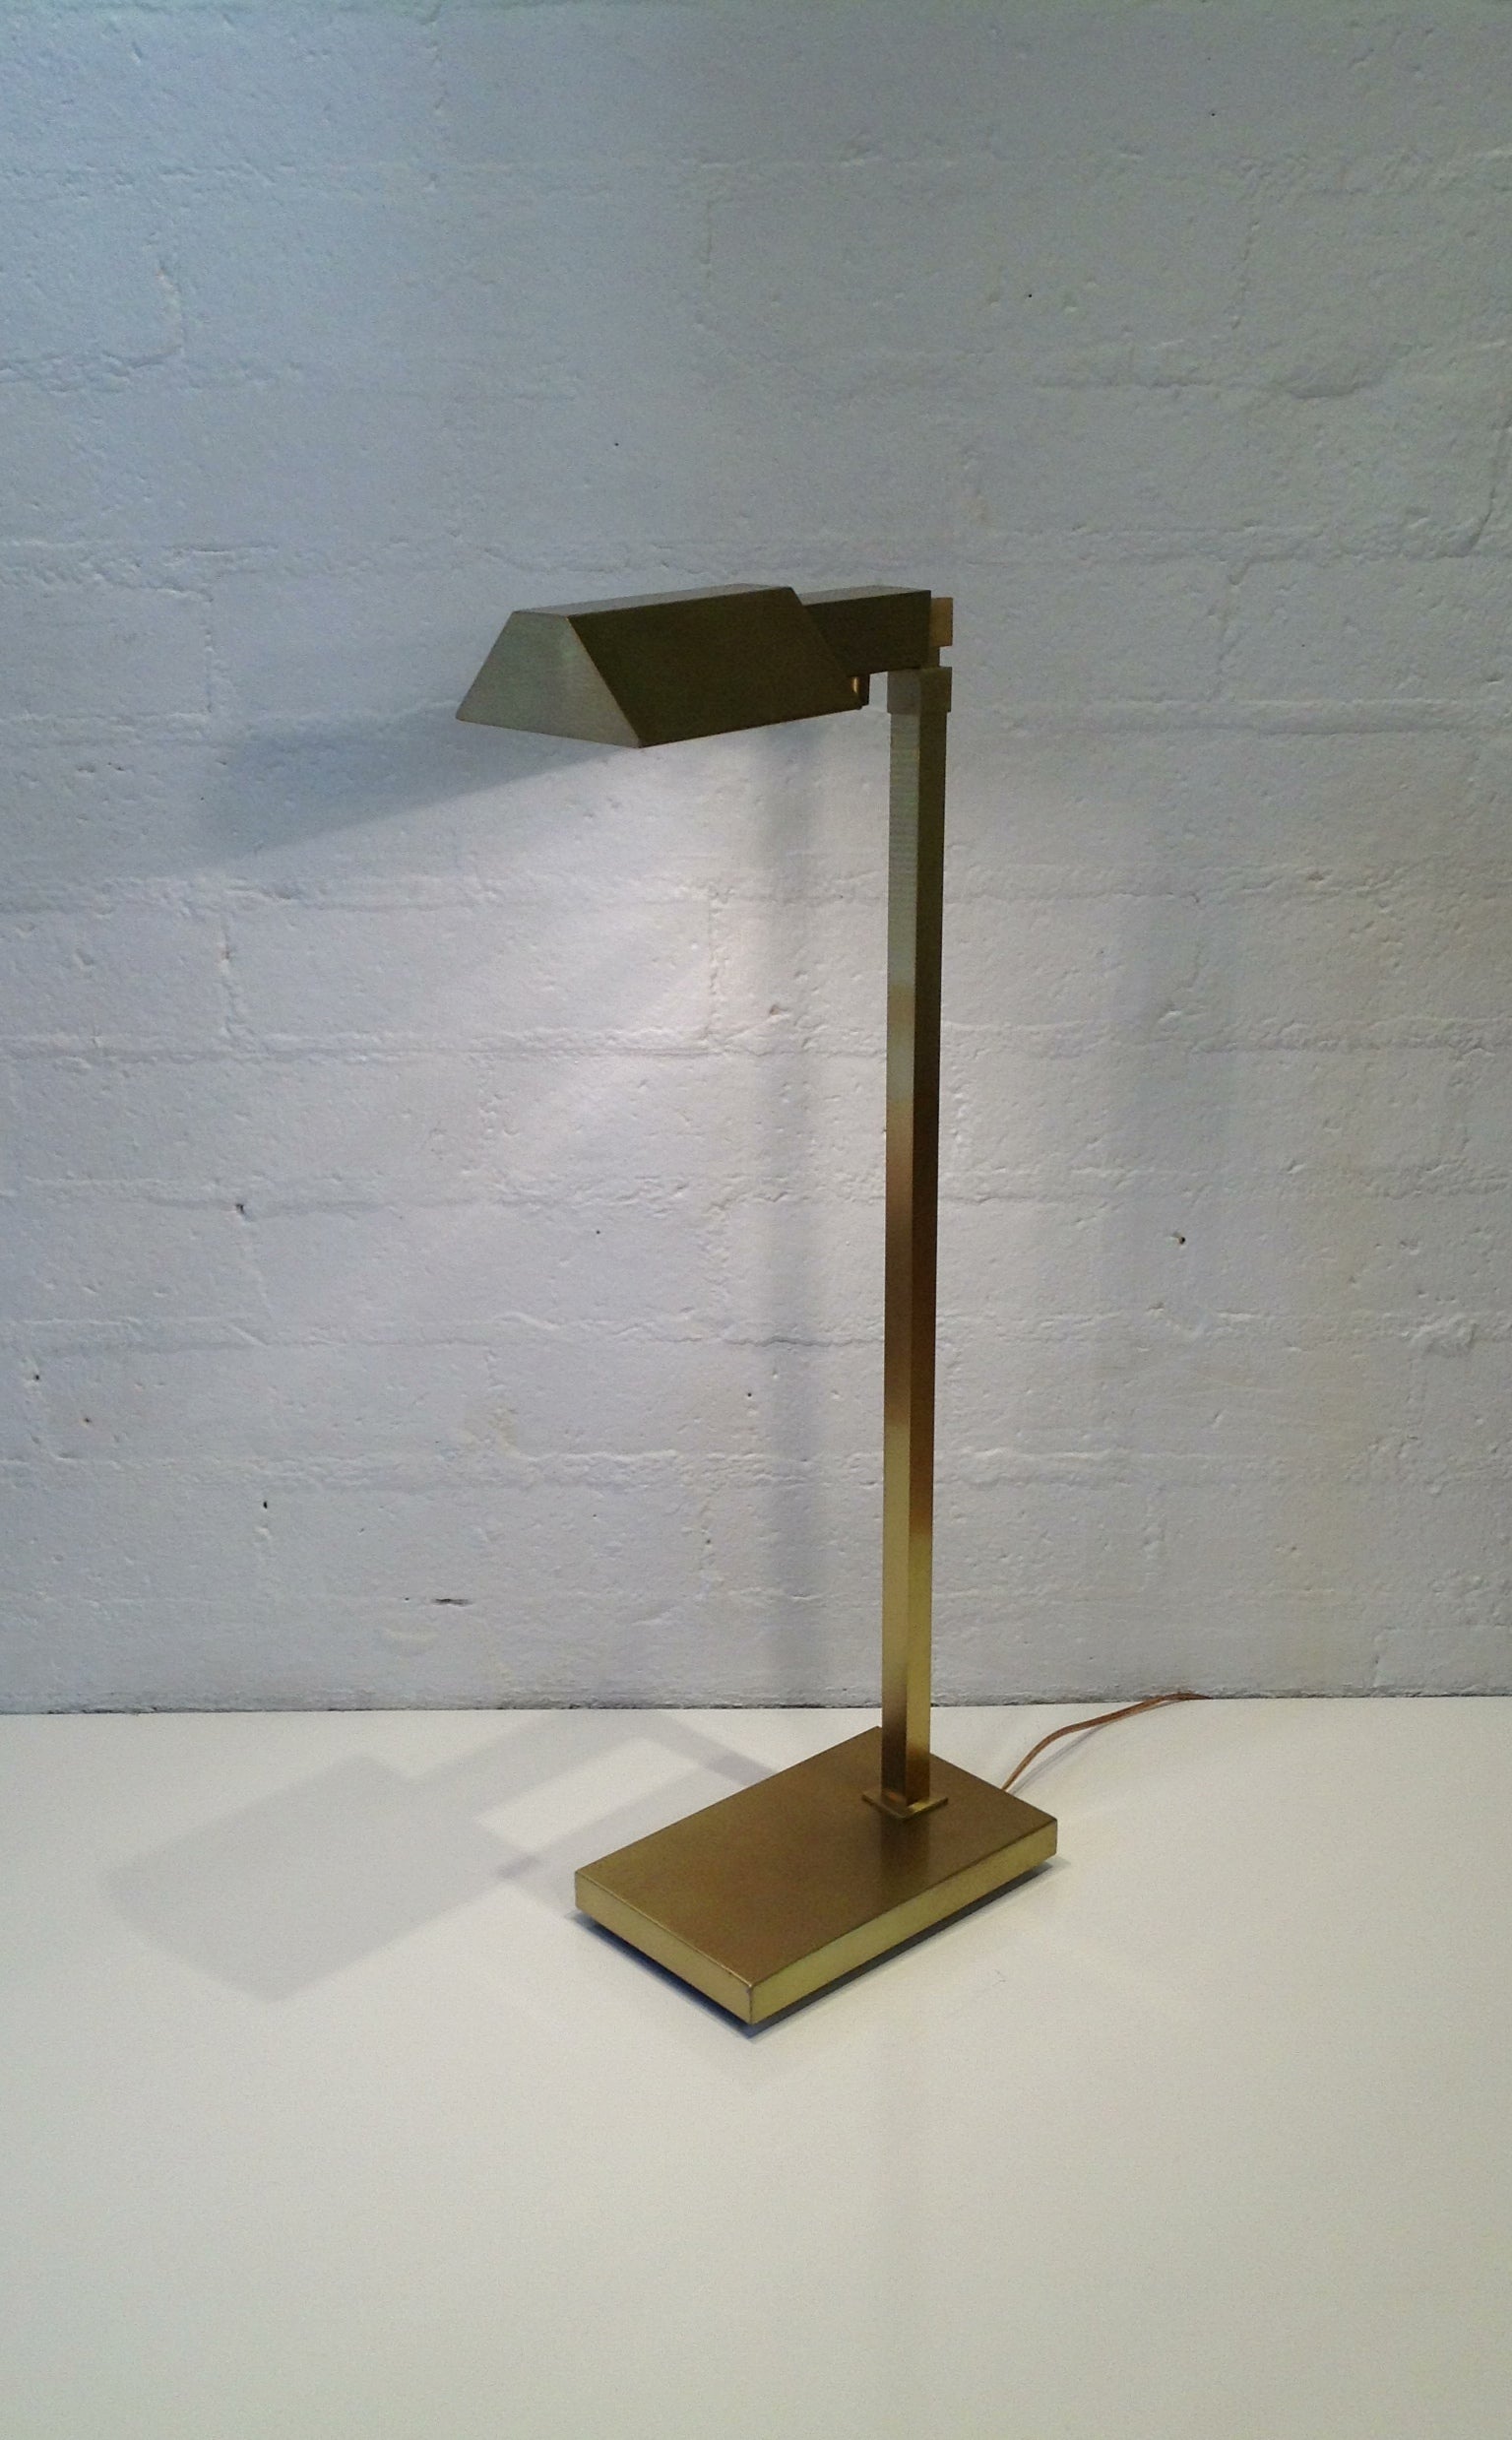 Casella Brushed Brass Adjustable Floor Lamp